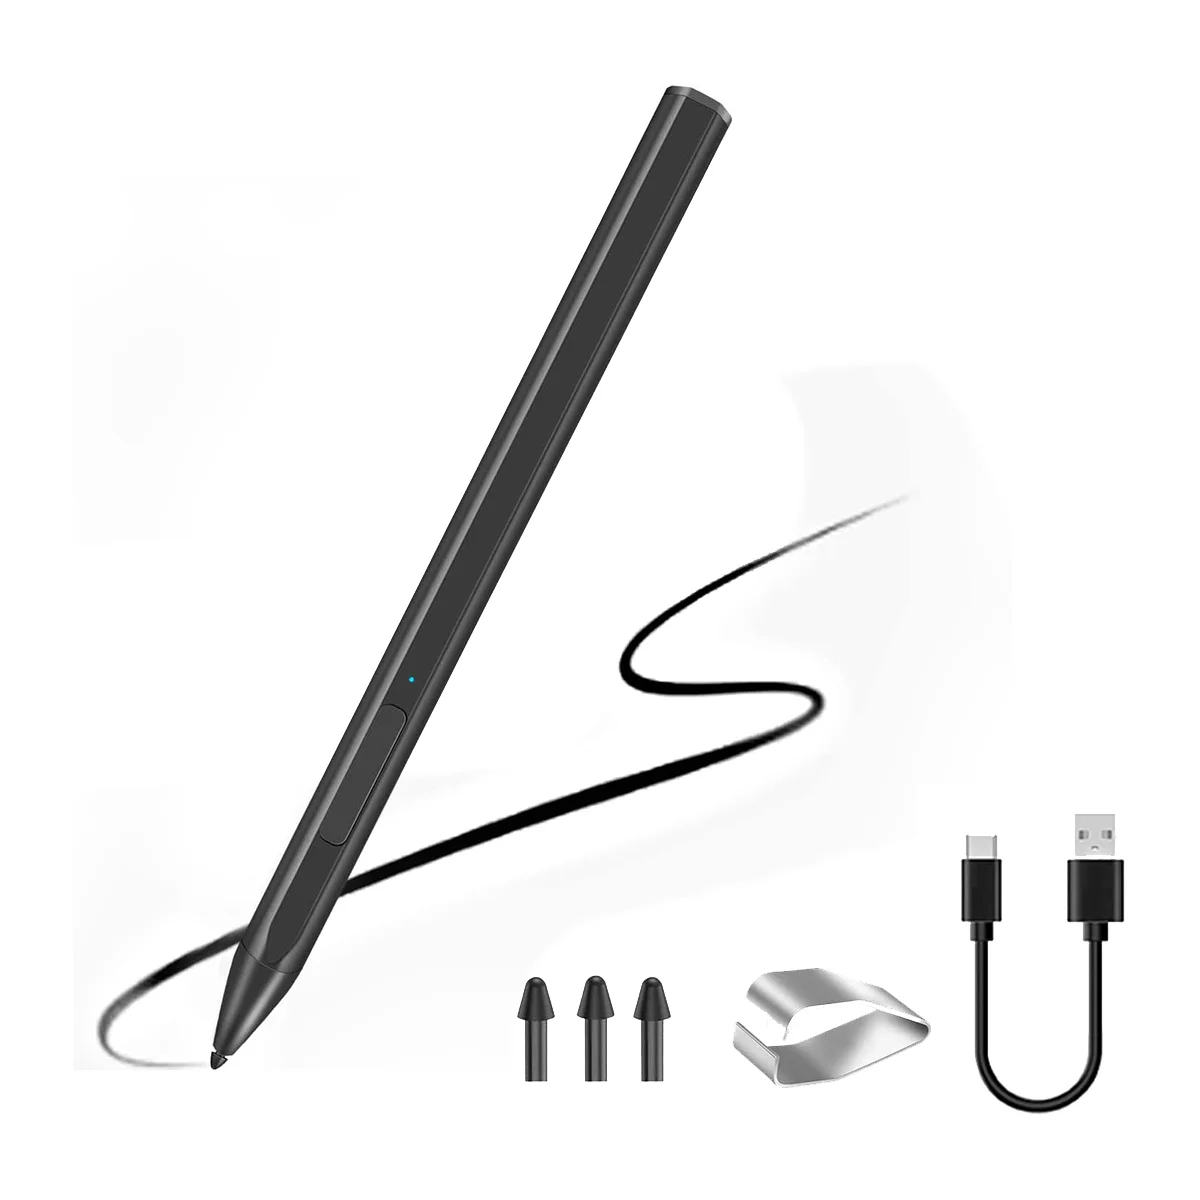 

Stylus Pen Magnetic for Surface Pro 3/4/5/6/7 Pro X Go 2 Book Latpop 4096 Levels Pressure Palm Rejection-Black